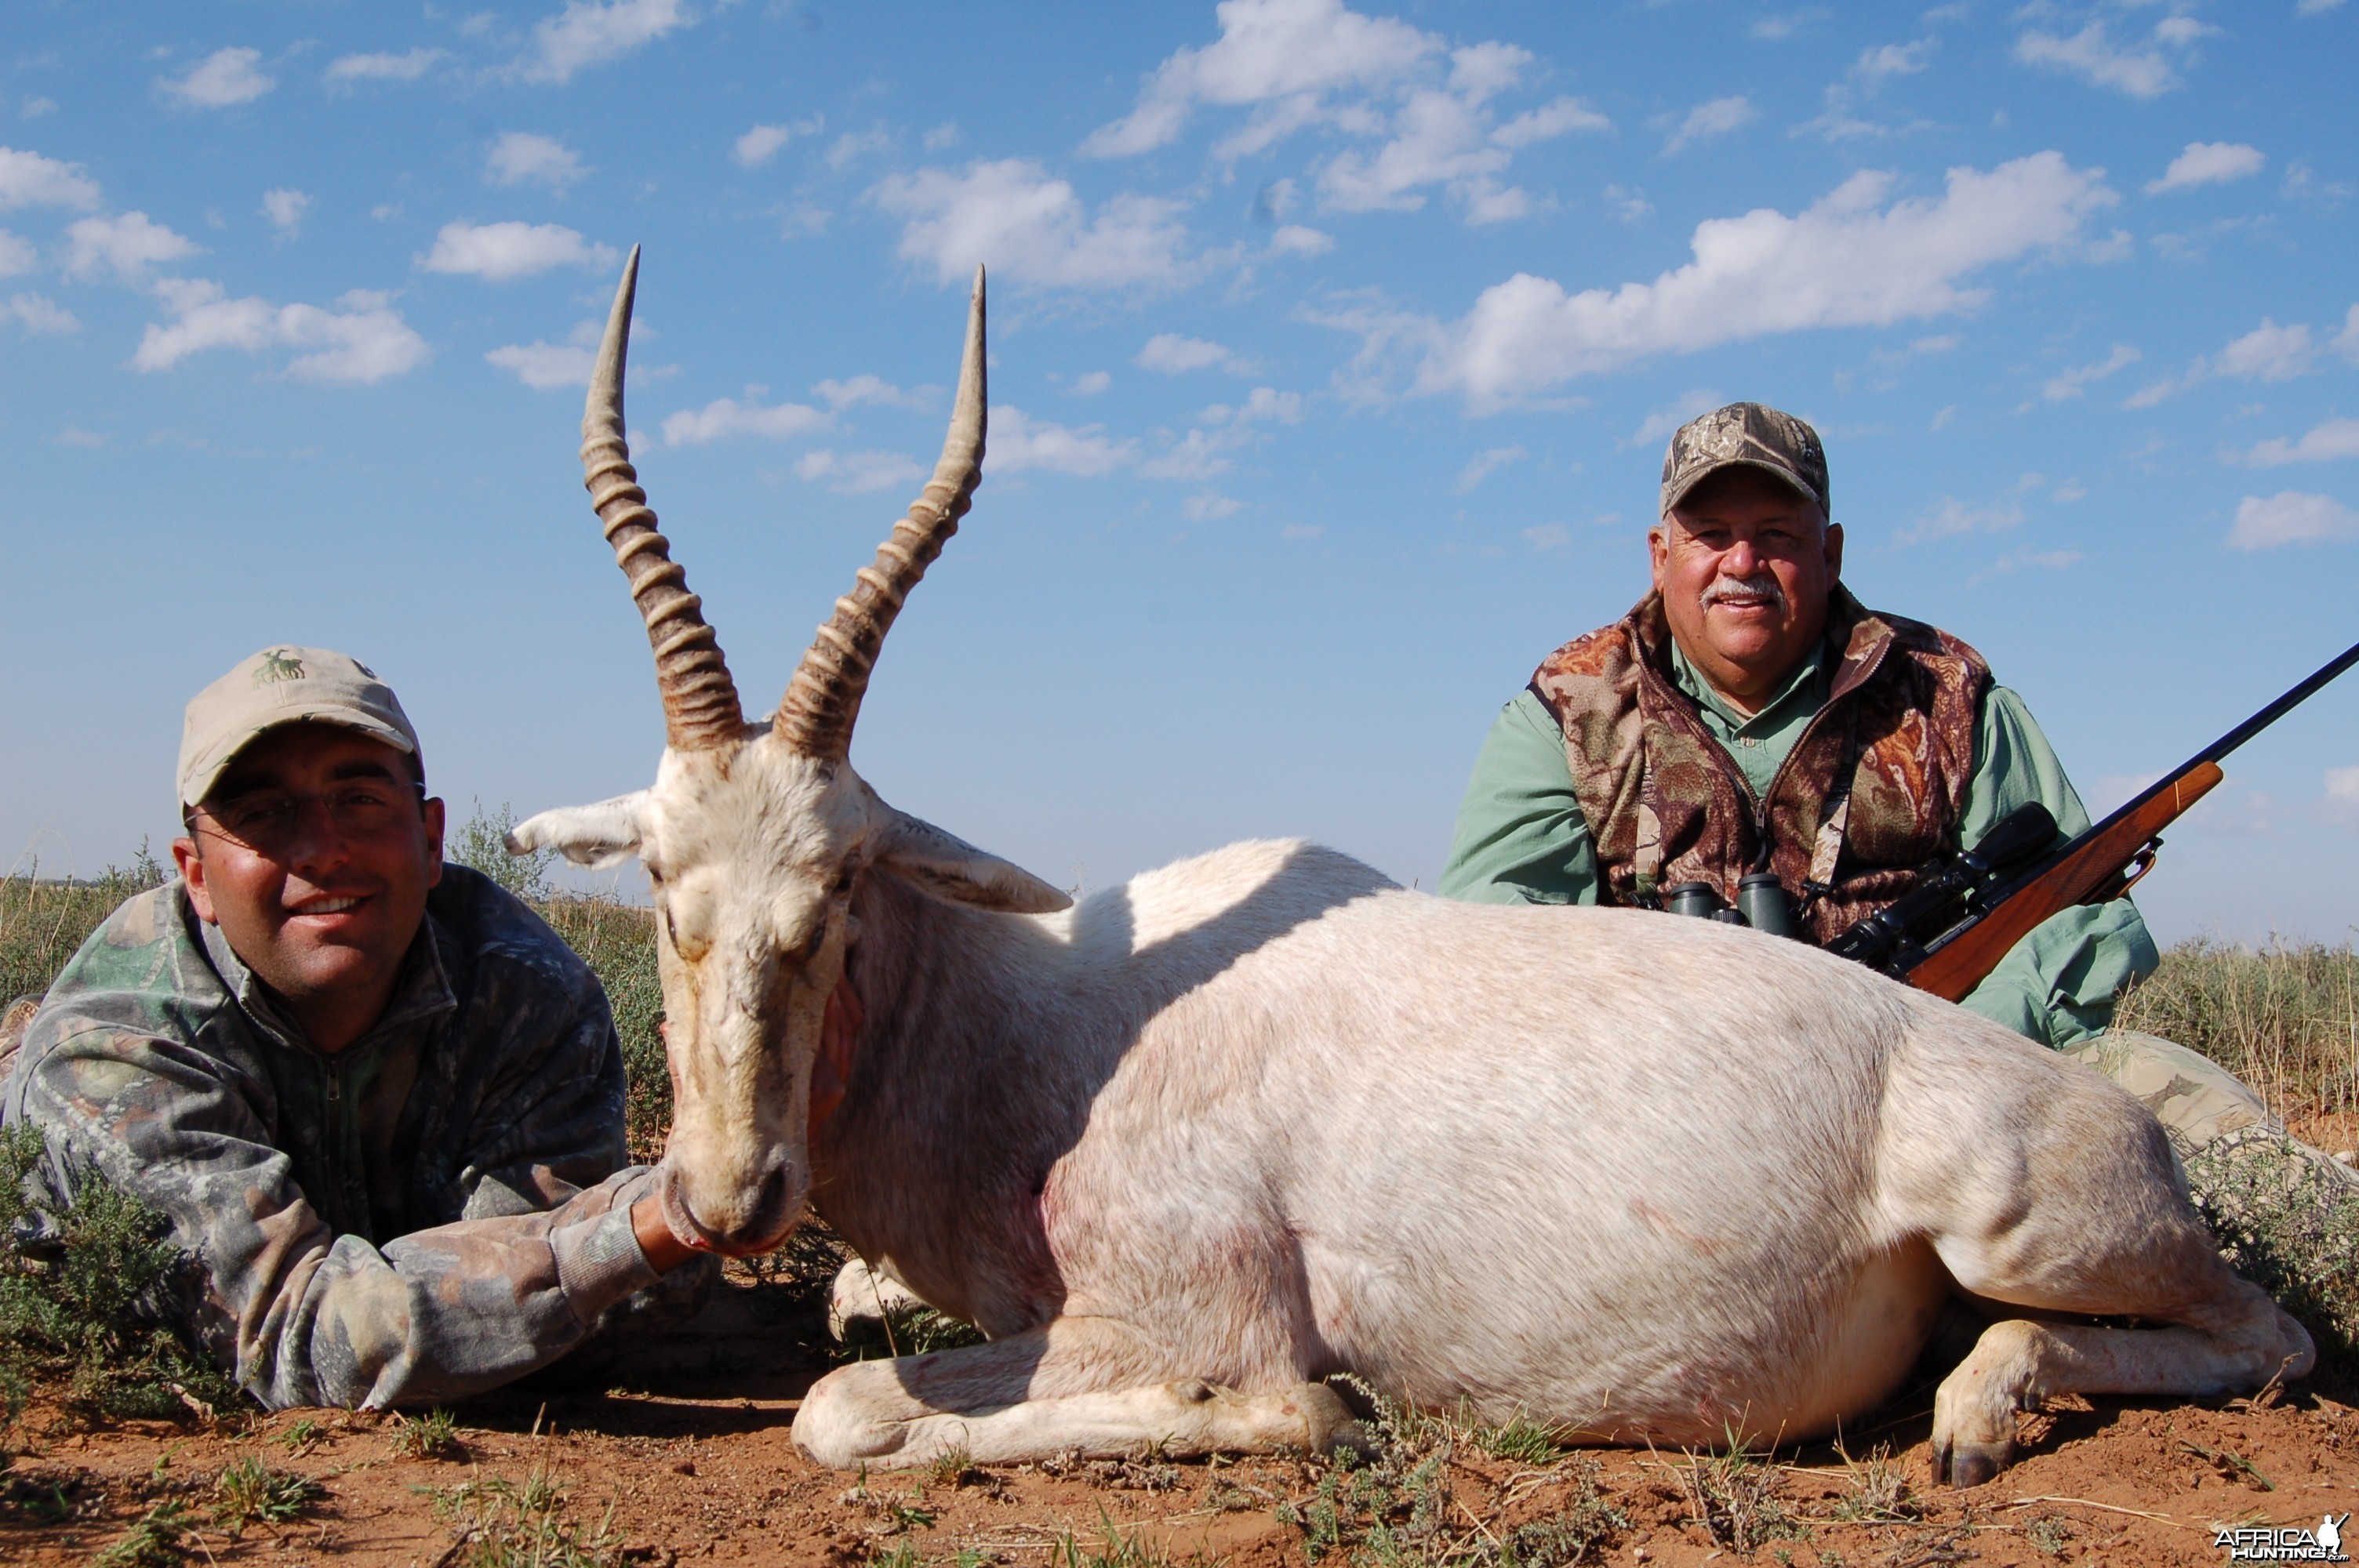 Hunting White Blesbok with Wintershoek Johnny Vivier Safaris in SA